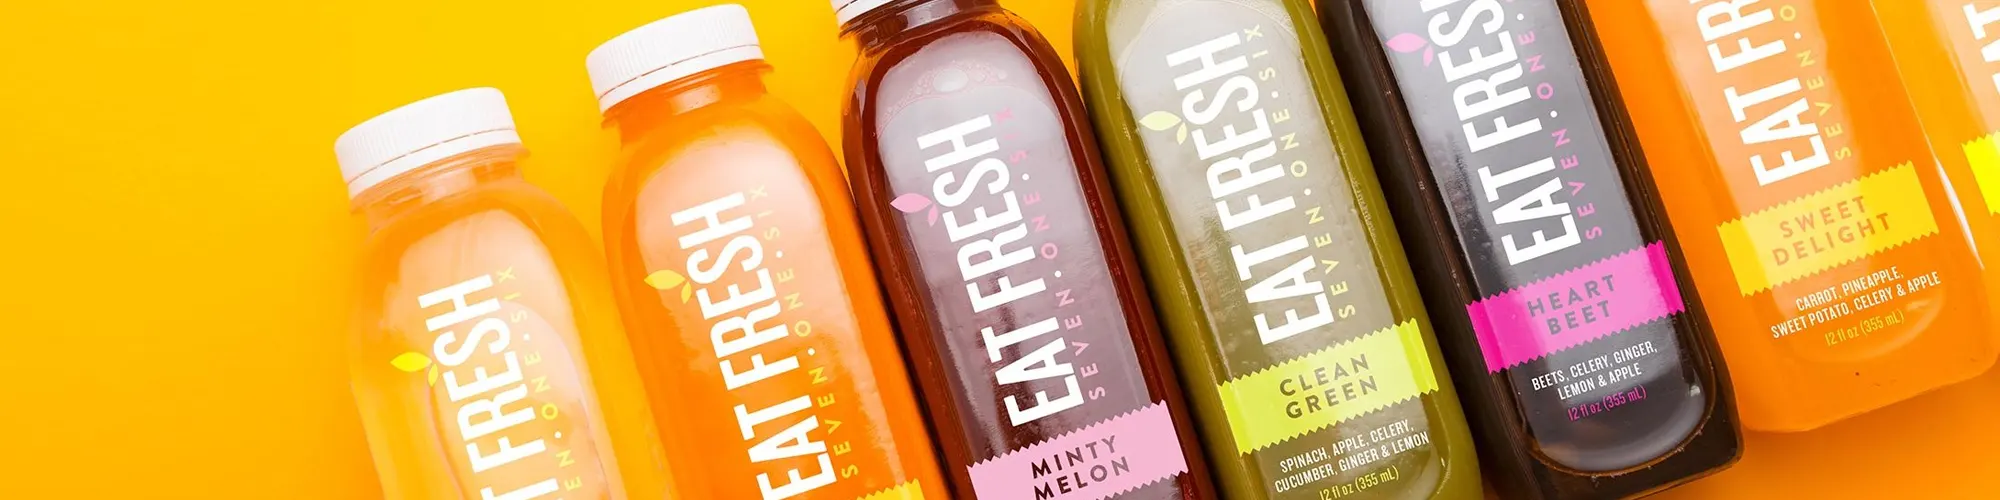 Eat Fresh Branding by the Design Department